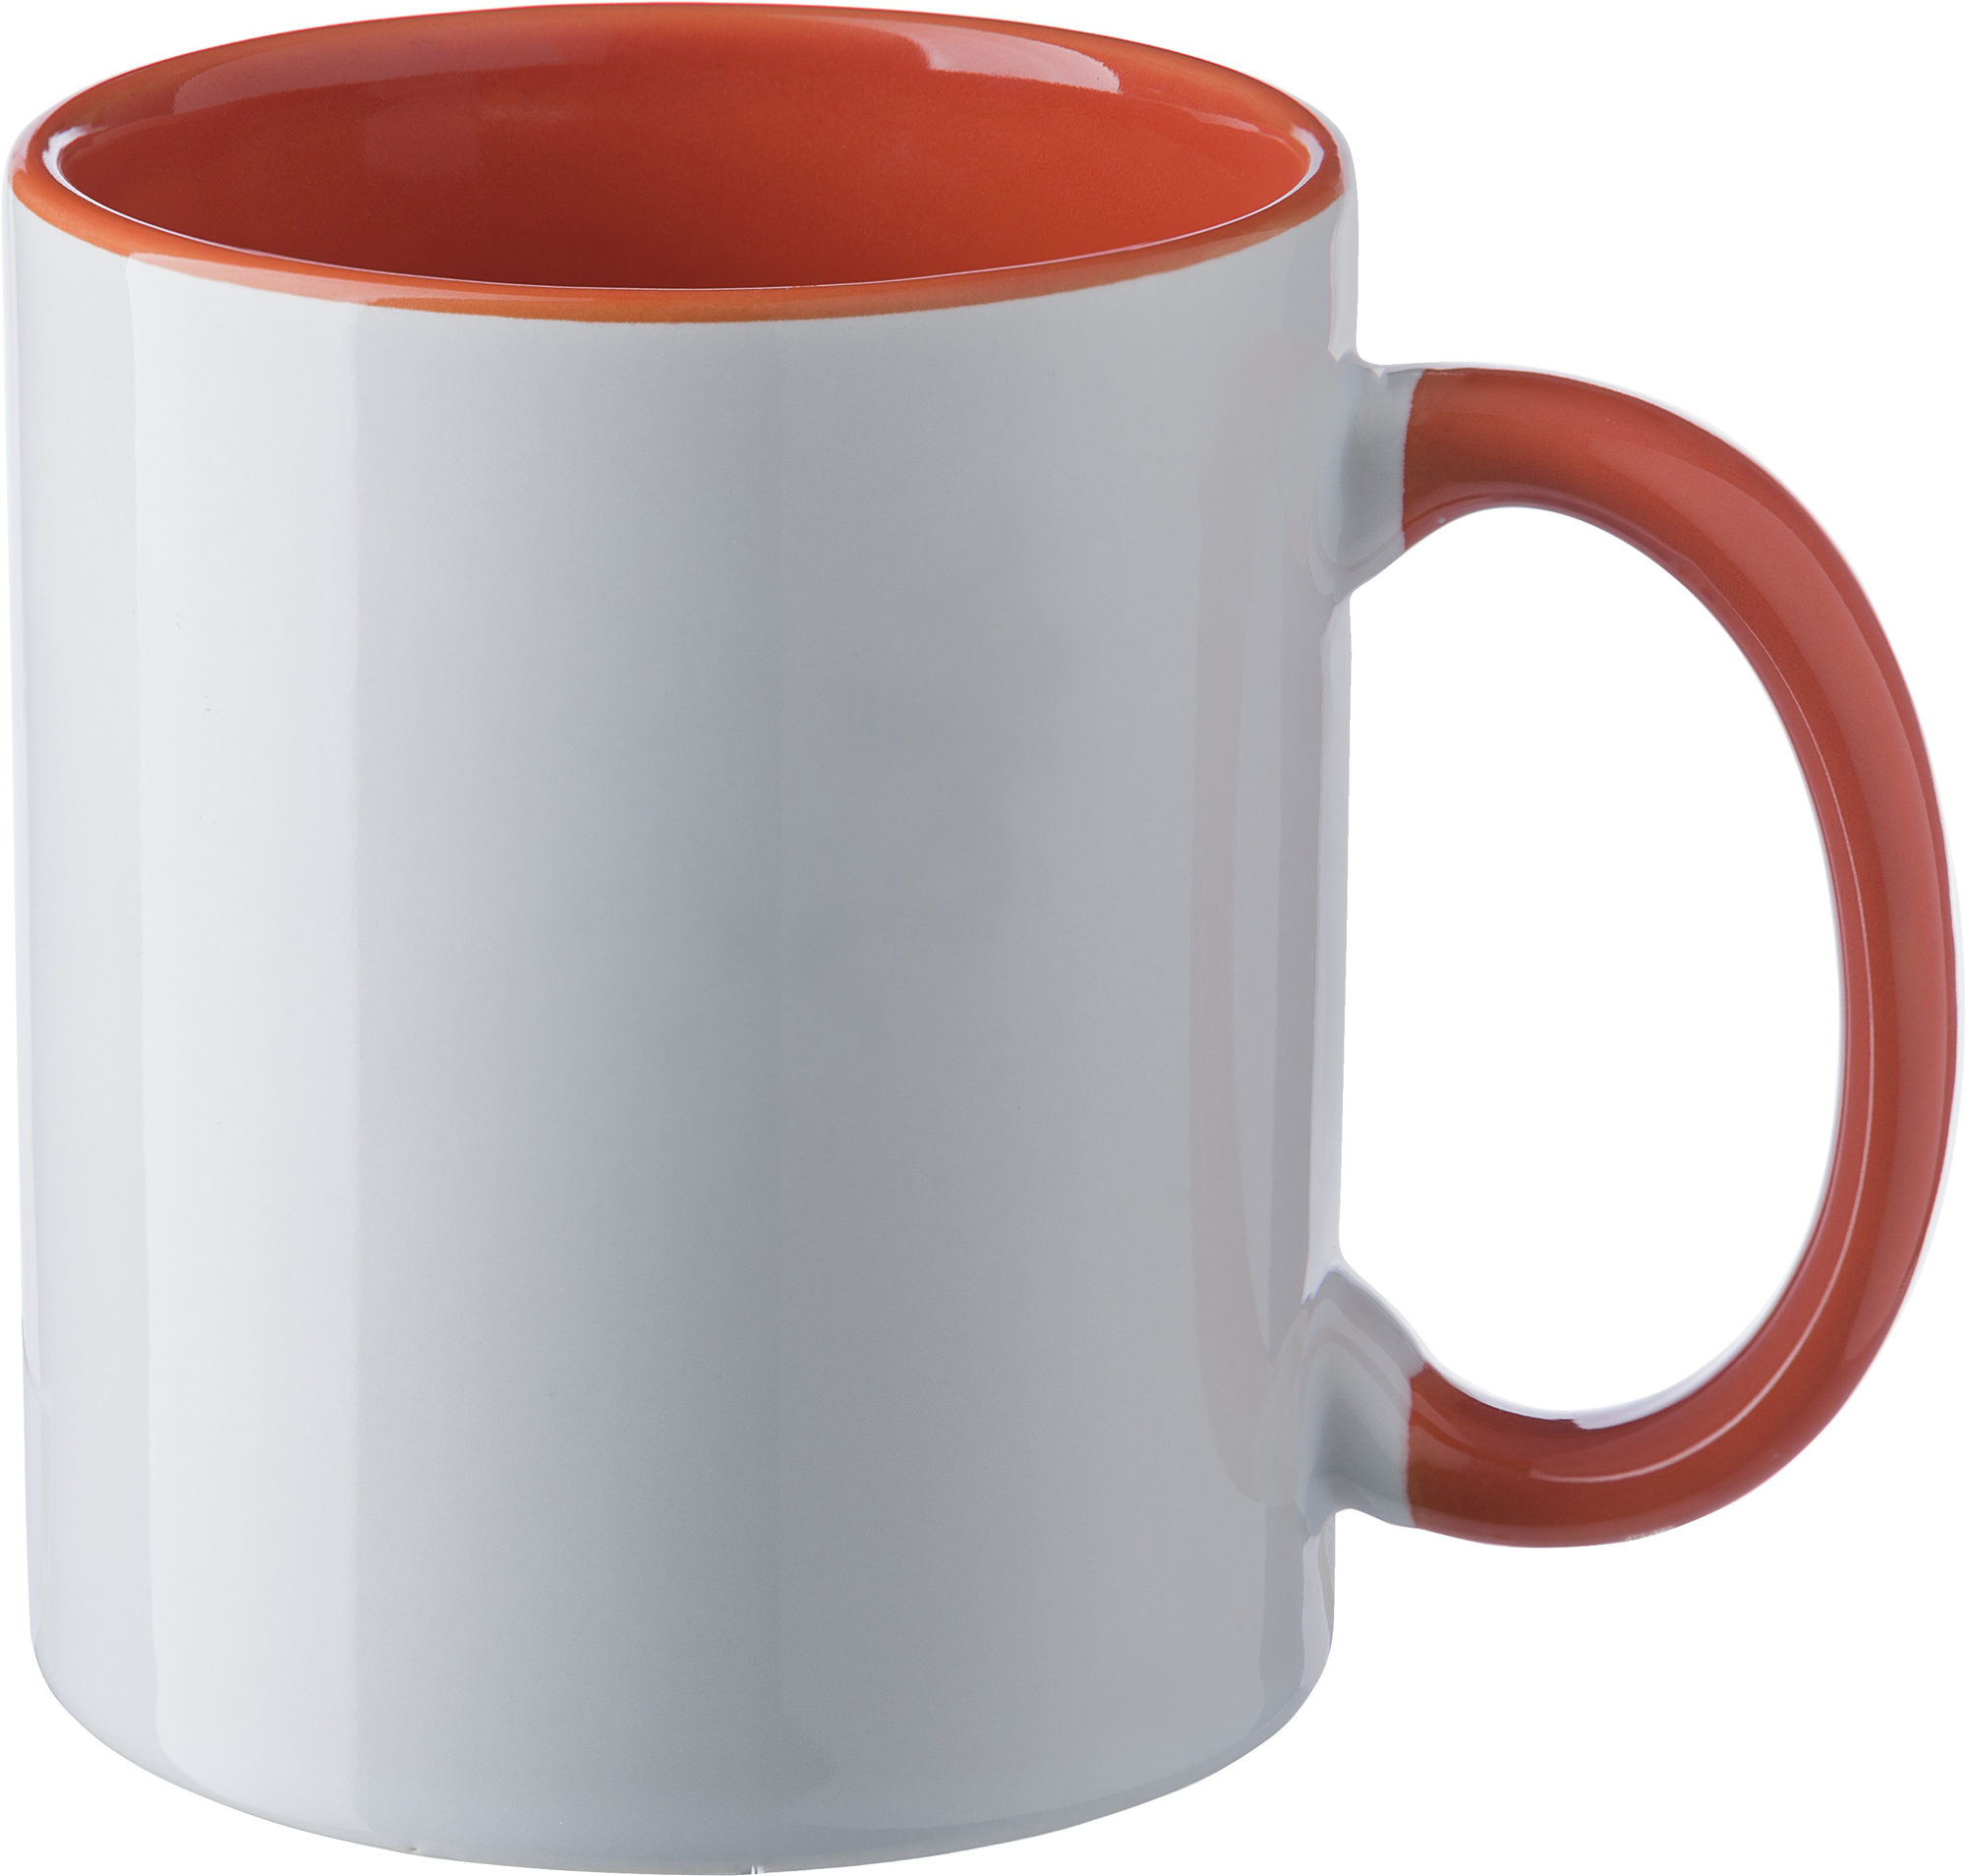 000000864564 007999999 3d045 rgt pro01 2022 fal - Ceramic mug (300ml)